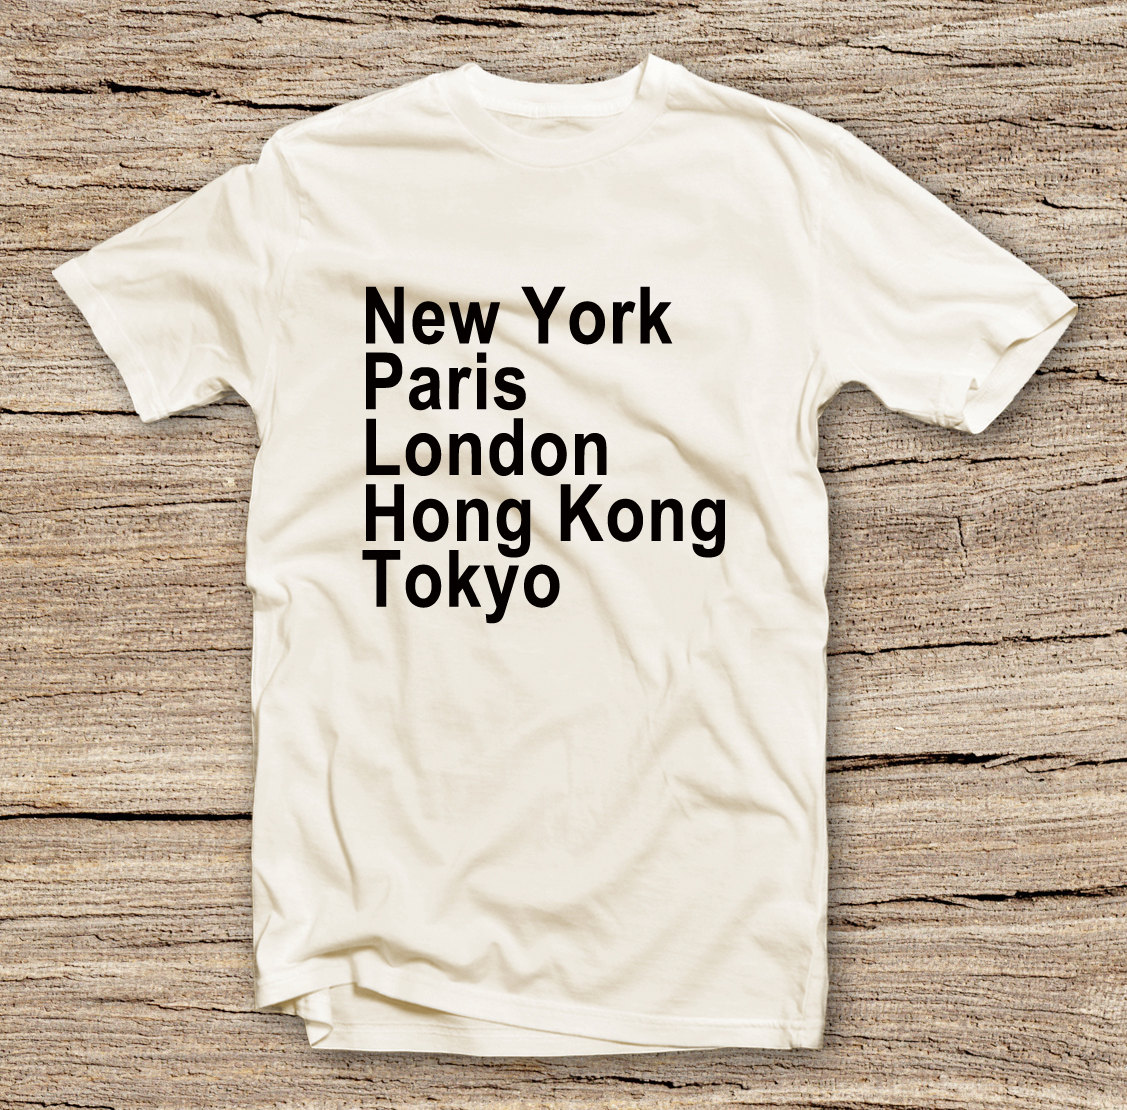 Pts-173 The Cities T-shirt York Hong Kong Paris London Tokyo, Fashion Shirts, Funny T-shirt, Cute T-shirts